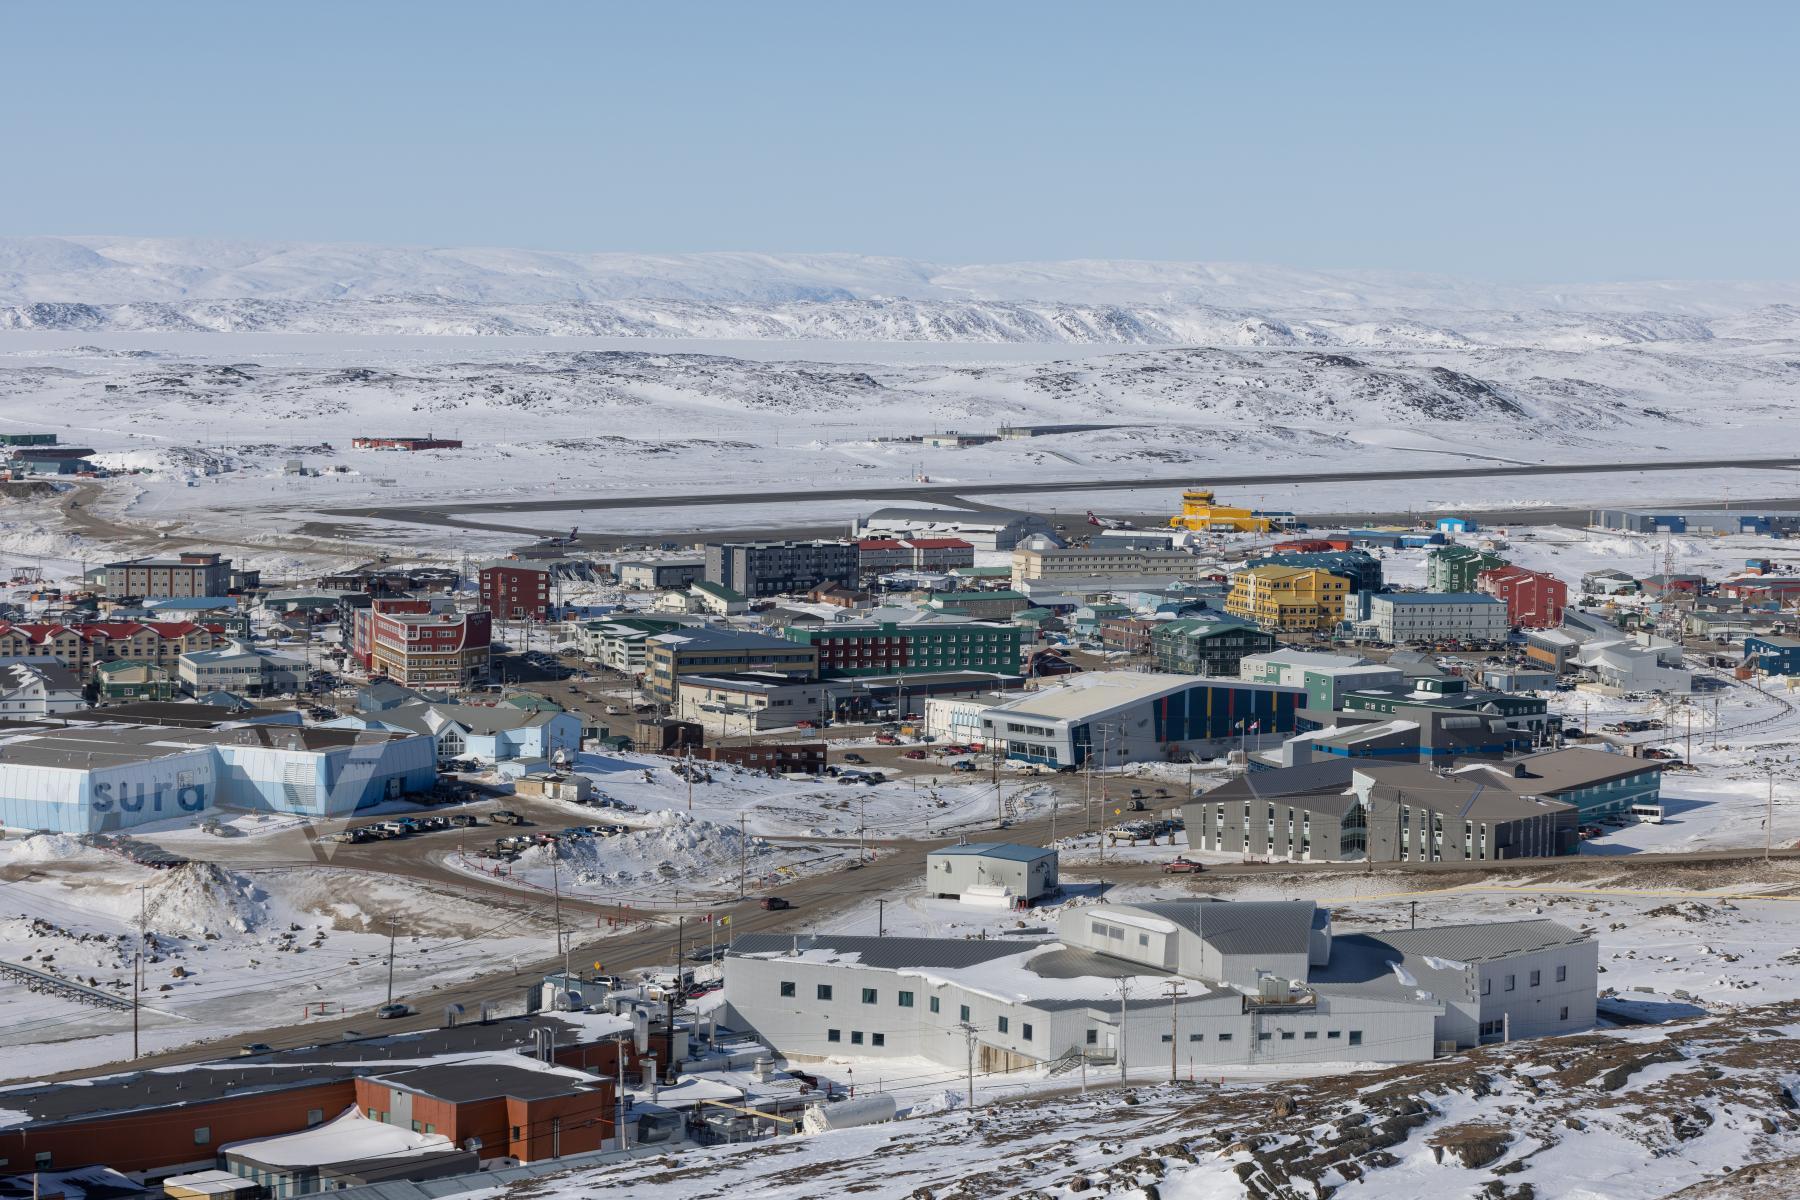 Purchase City of Iqaluit by Lisa Milosavljevic